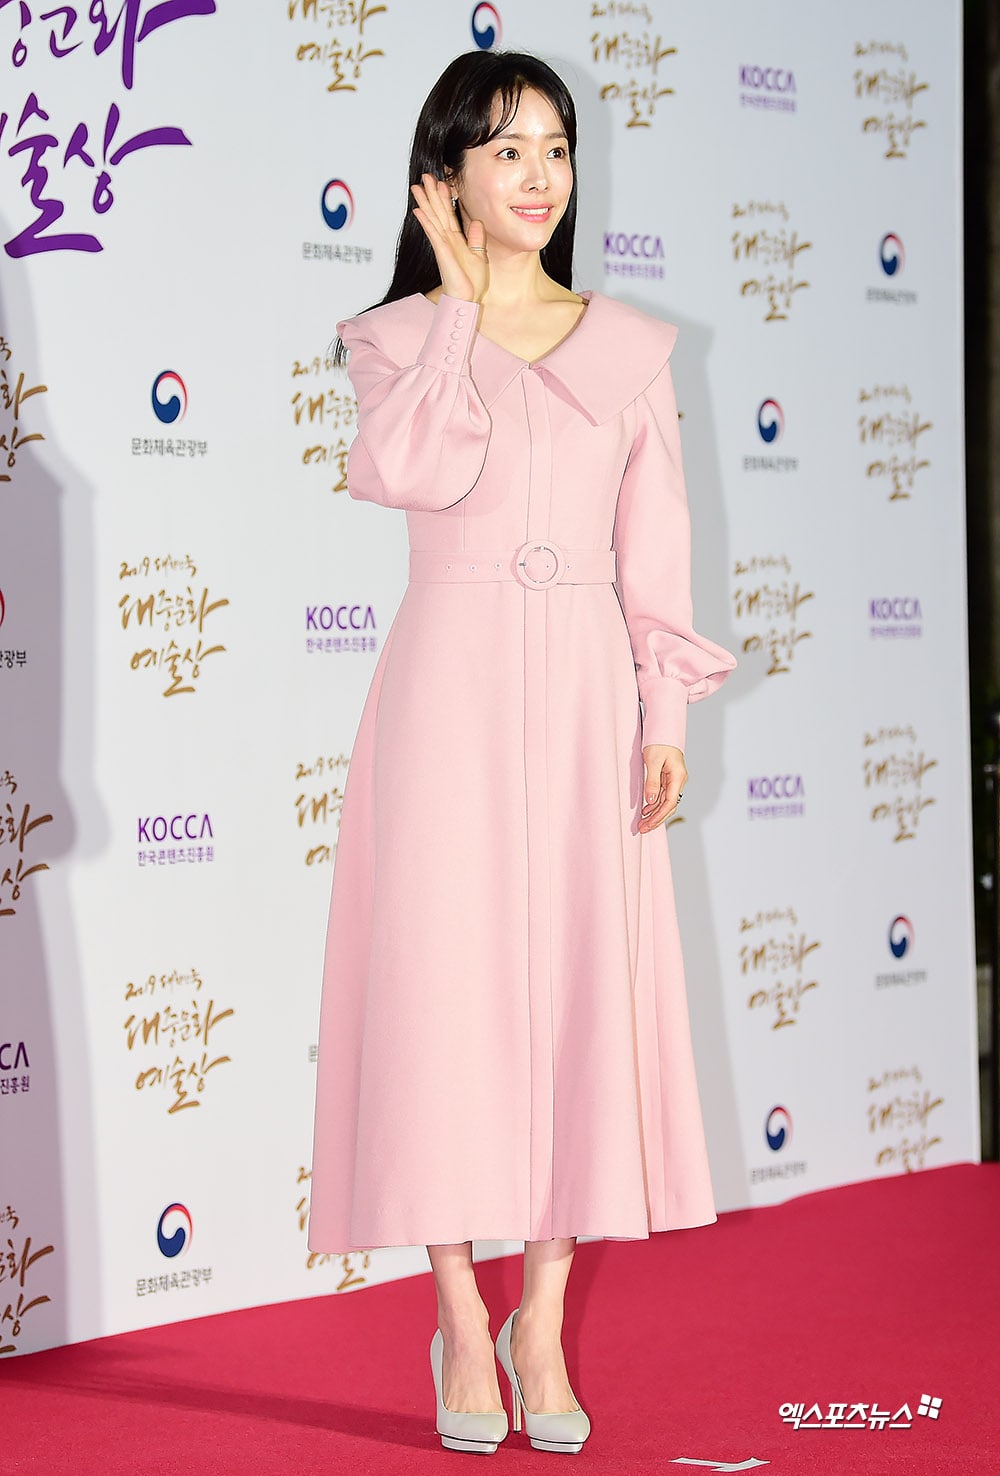 Some Korean Celebrities Walking on The Red Carpet for ‘2019 Korean Popular Culture & Arts Awards’